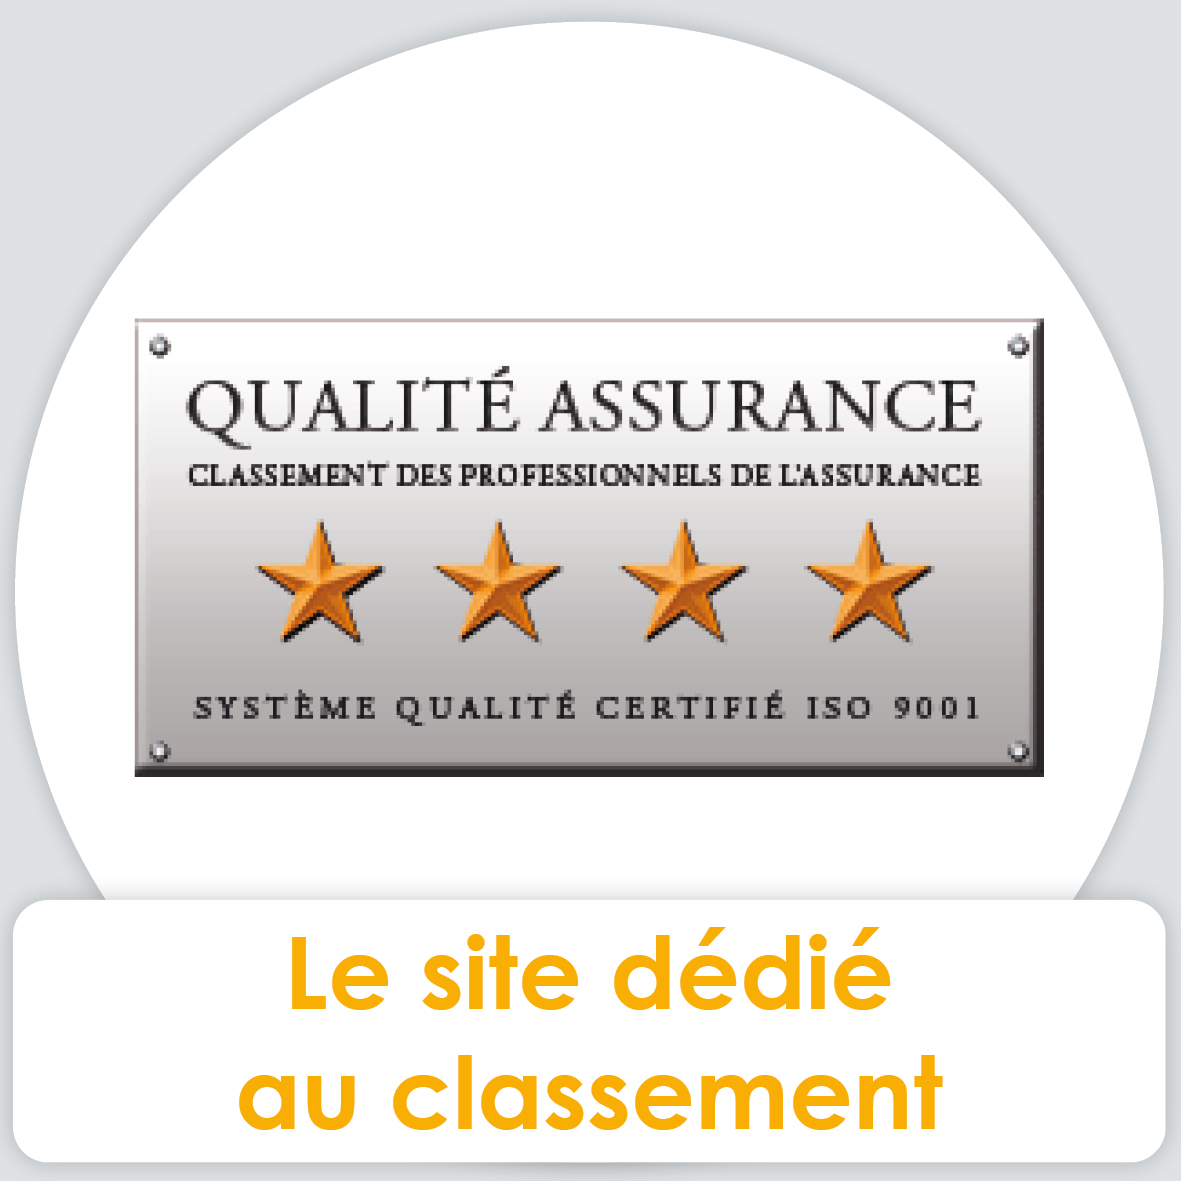 https://www.qualite-assurance.com/Classement_r2.html